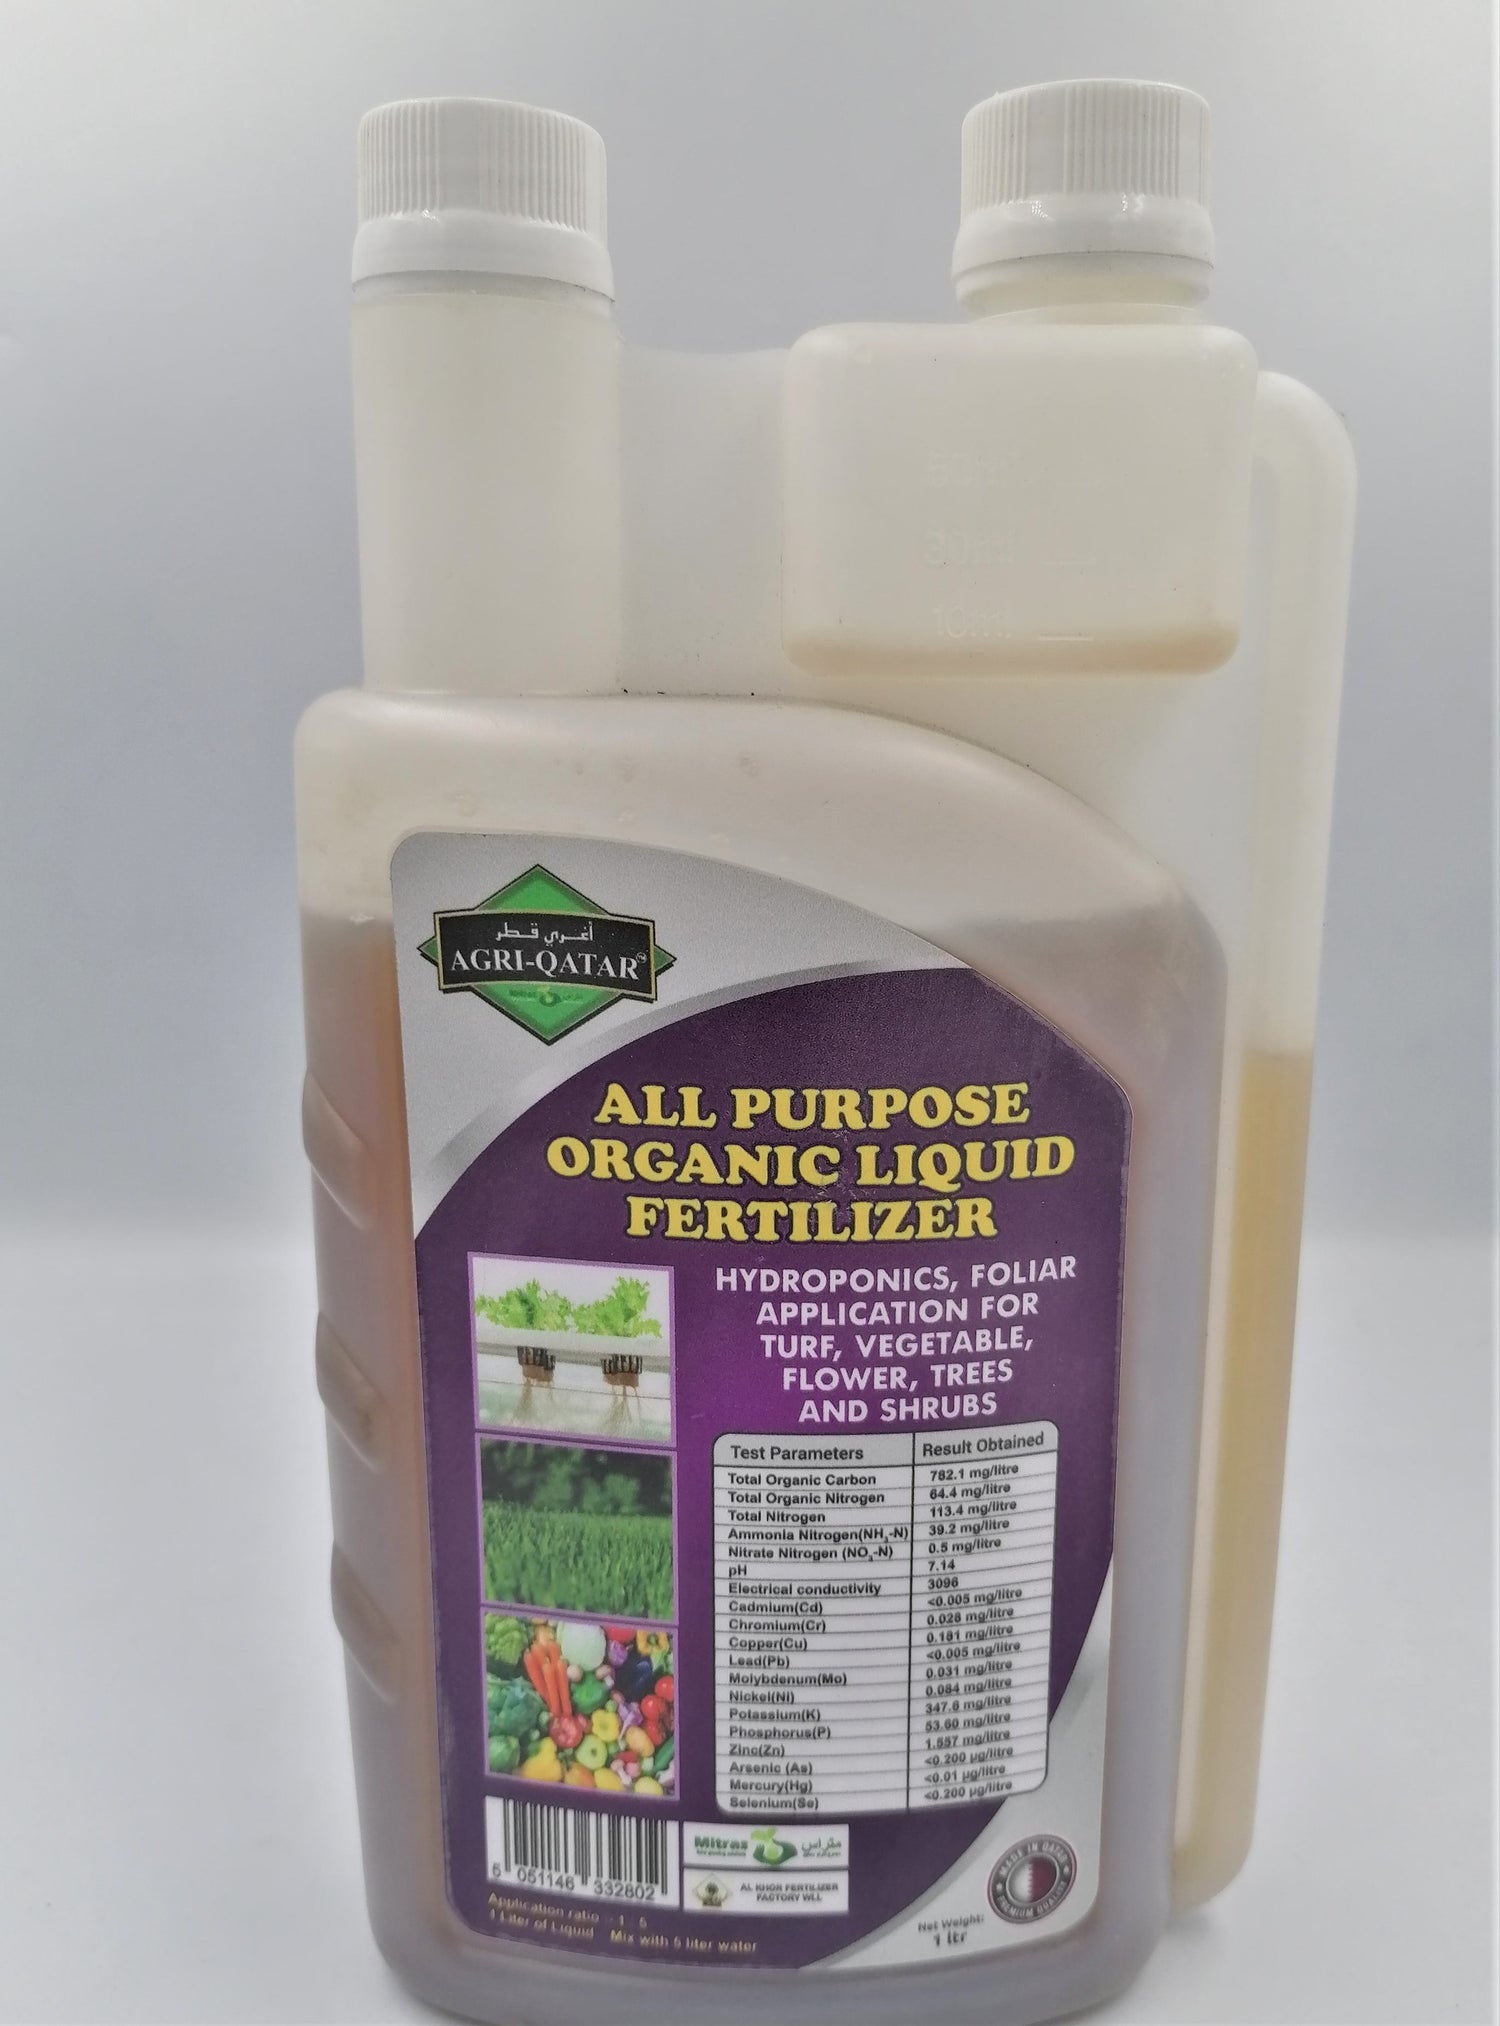 Agri-Qatar Organic Liquid Fertilizer (1 liter)